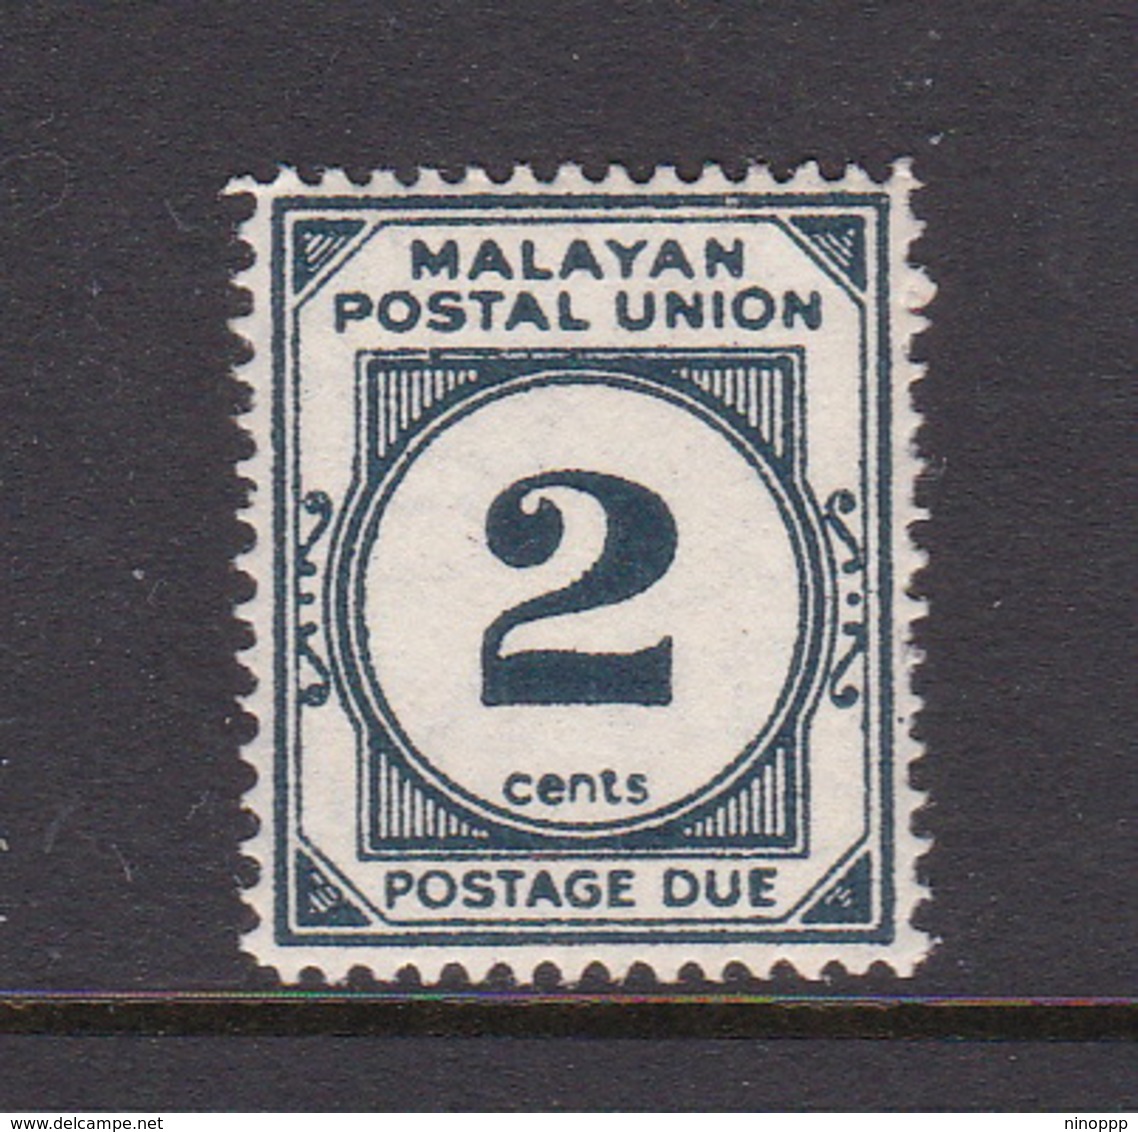 Malayan Postal Union D15 1953 Postage Due 2c Deep Slate Blue,mint Hinged - Malaya (British Military Administration)